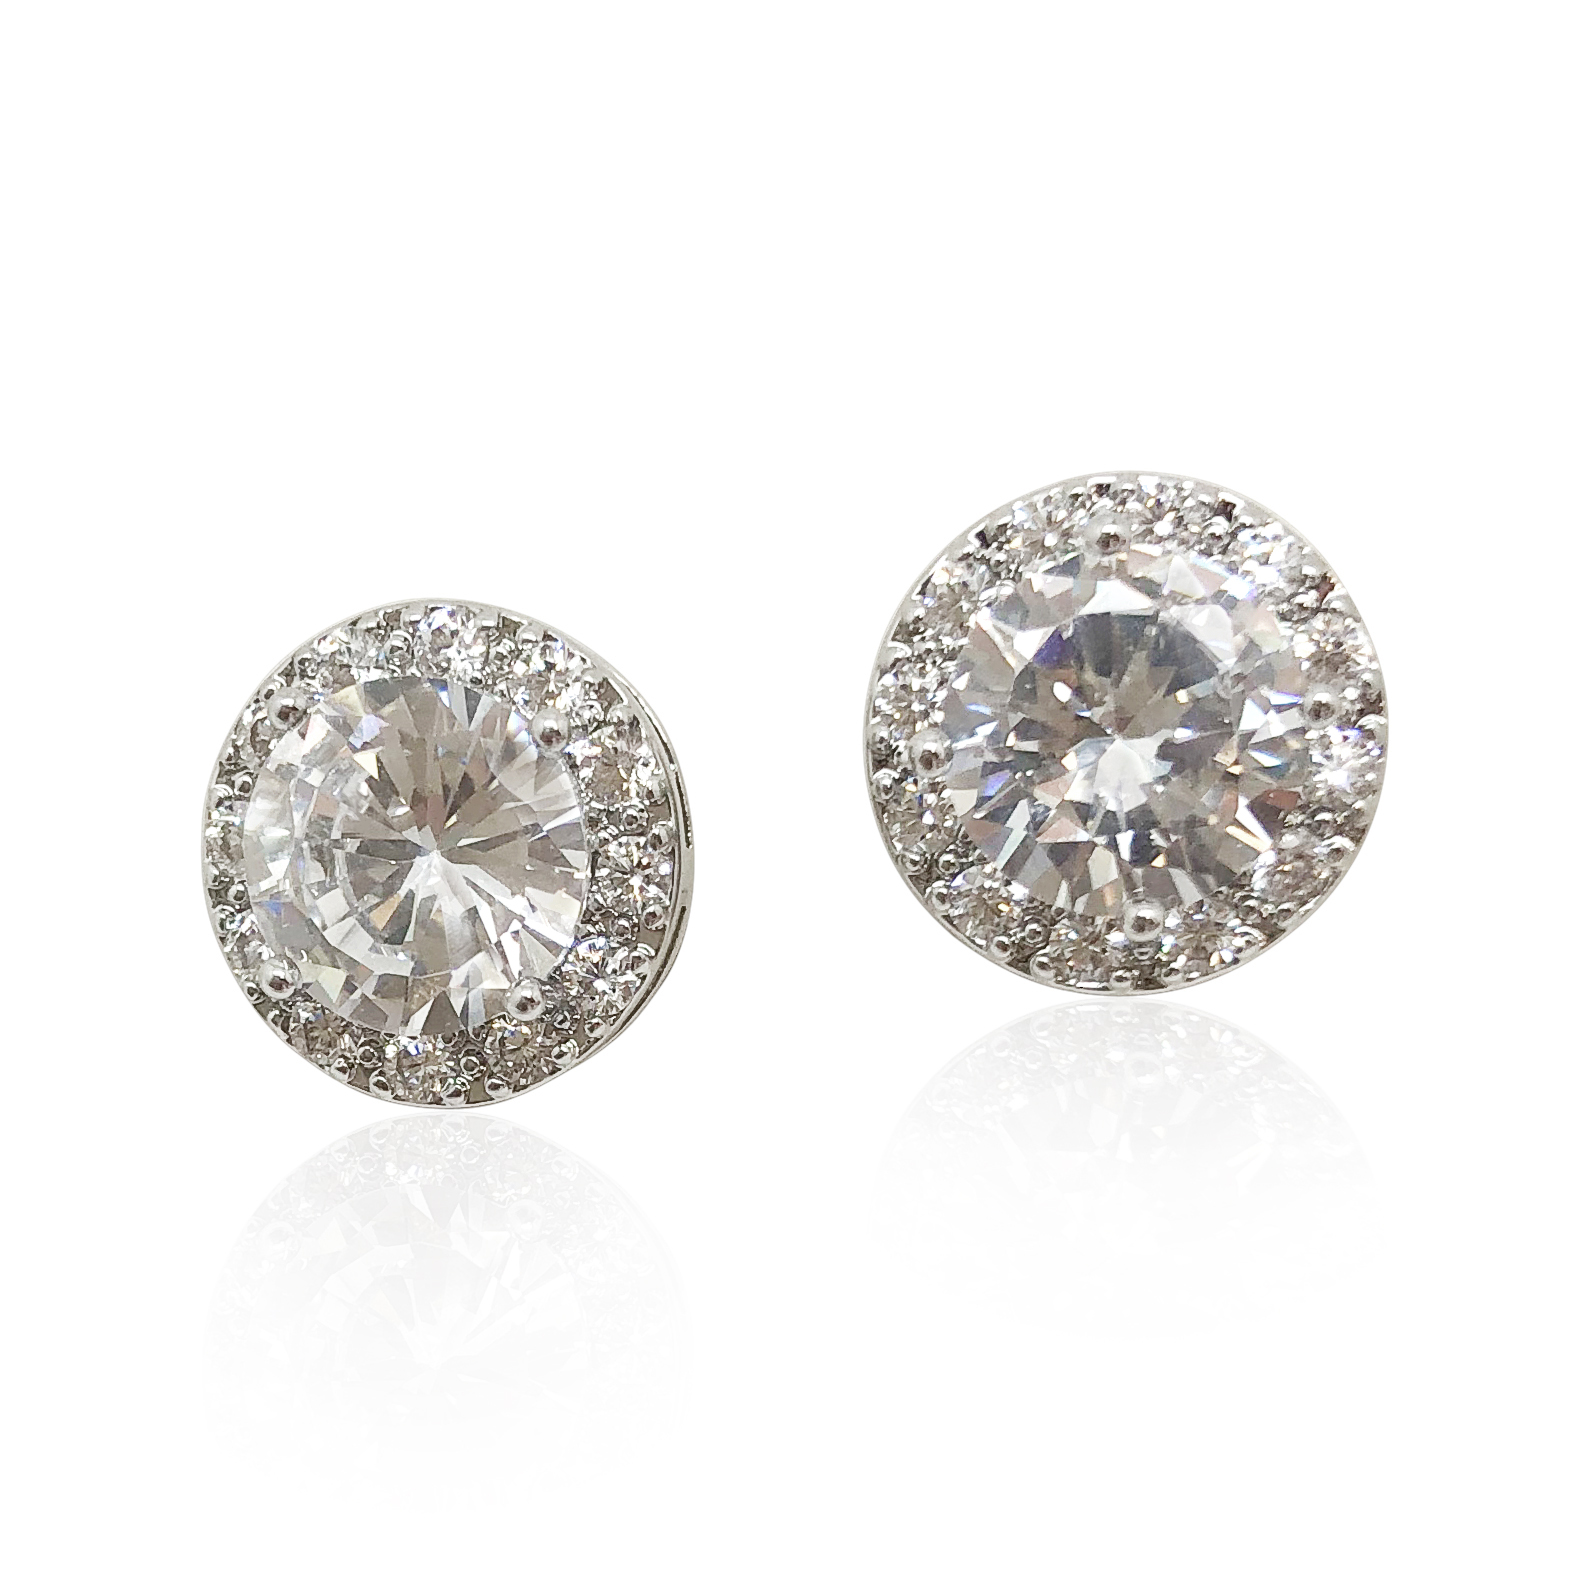 Bridal stud earrings|Aleah|Jeanette Maree|Shop Online Now